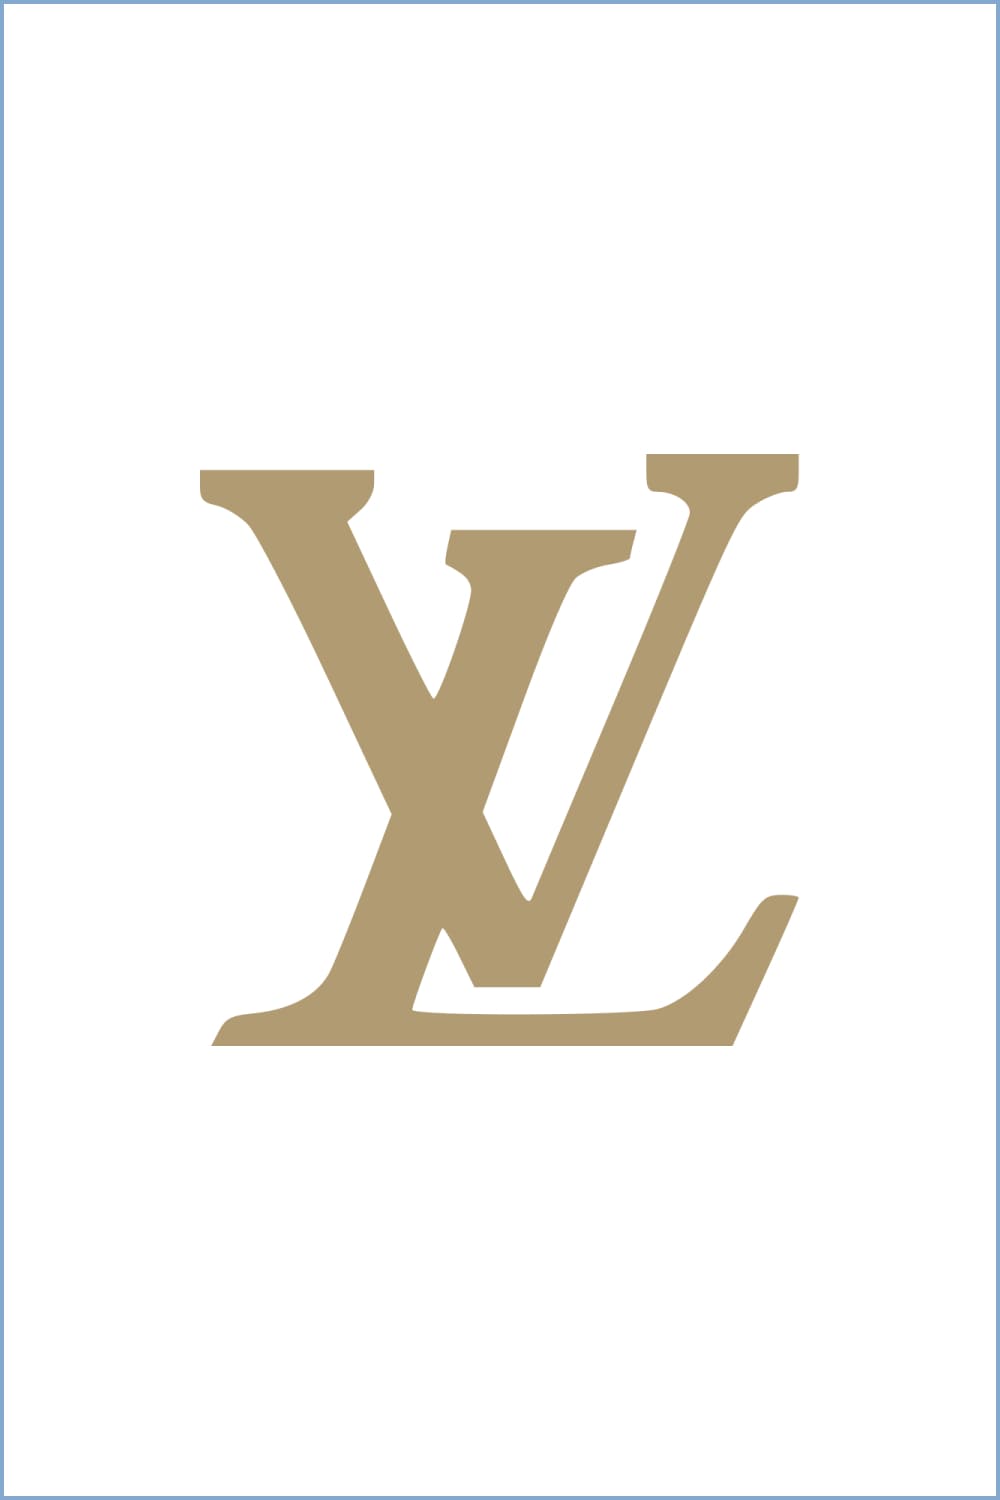 Louis vuitton SVG - pattern bundle svg LV logo Fashion - SvgSquad